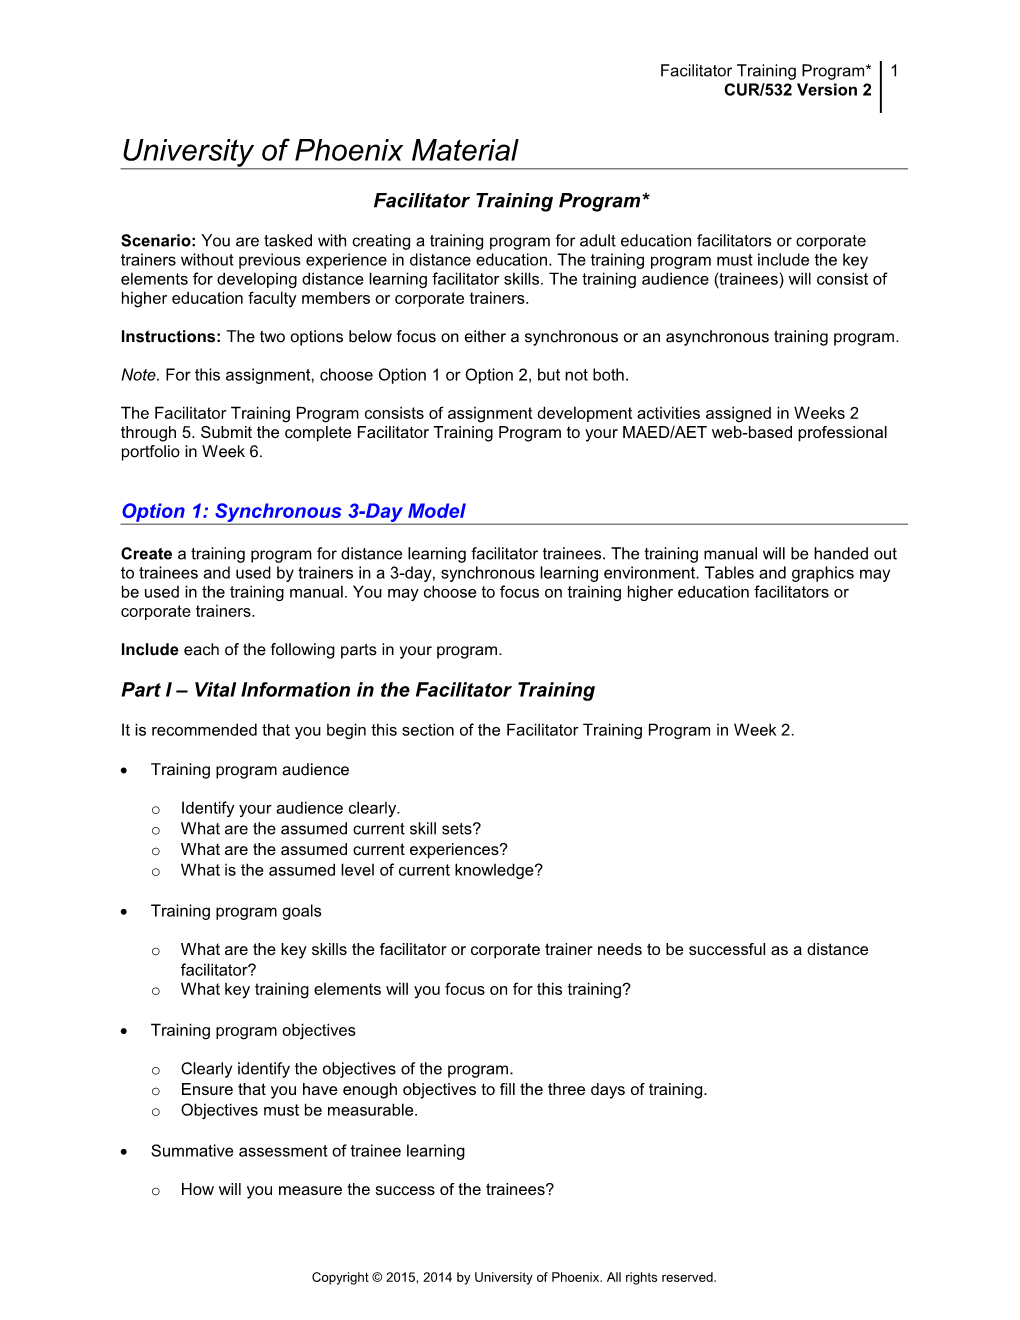 Facilitator Training Program* CUR/532 Version 2